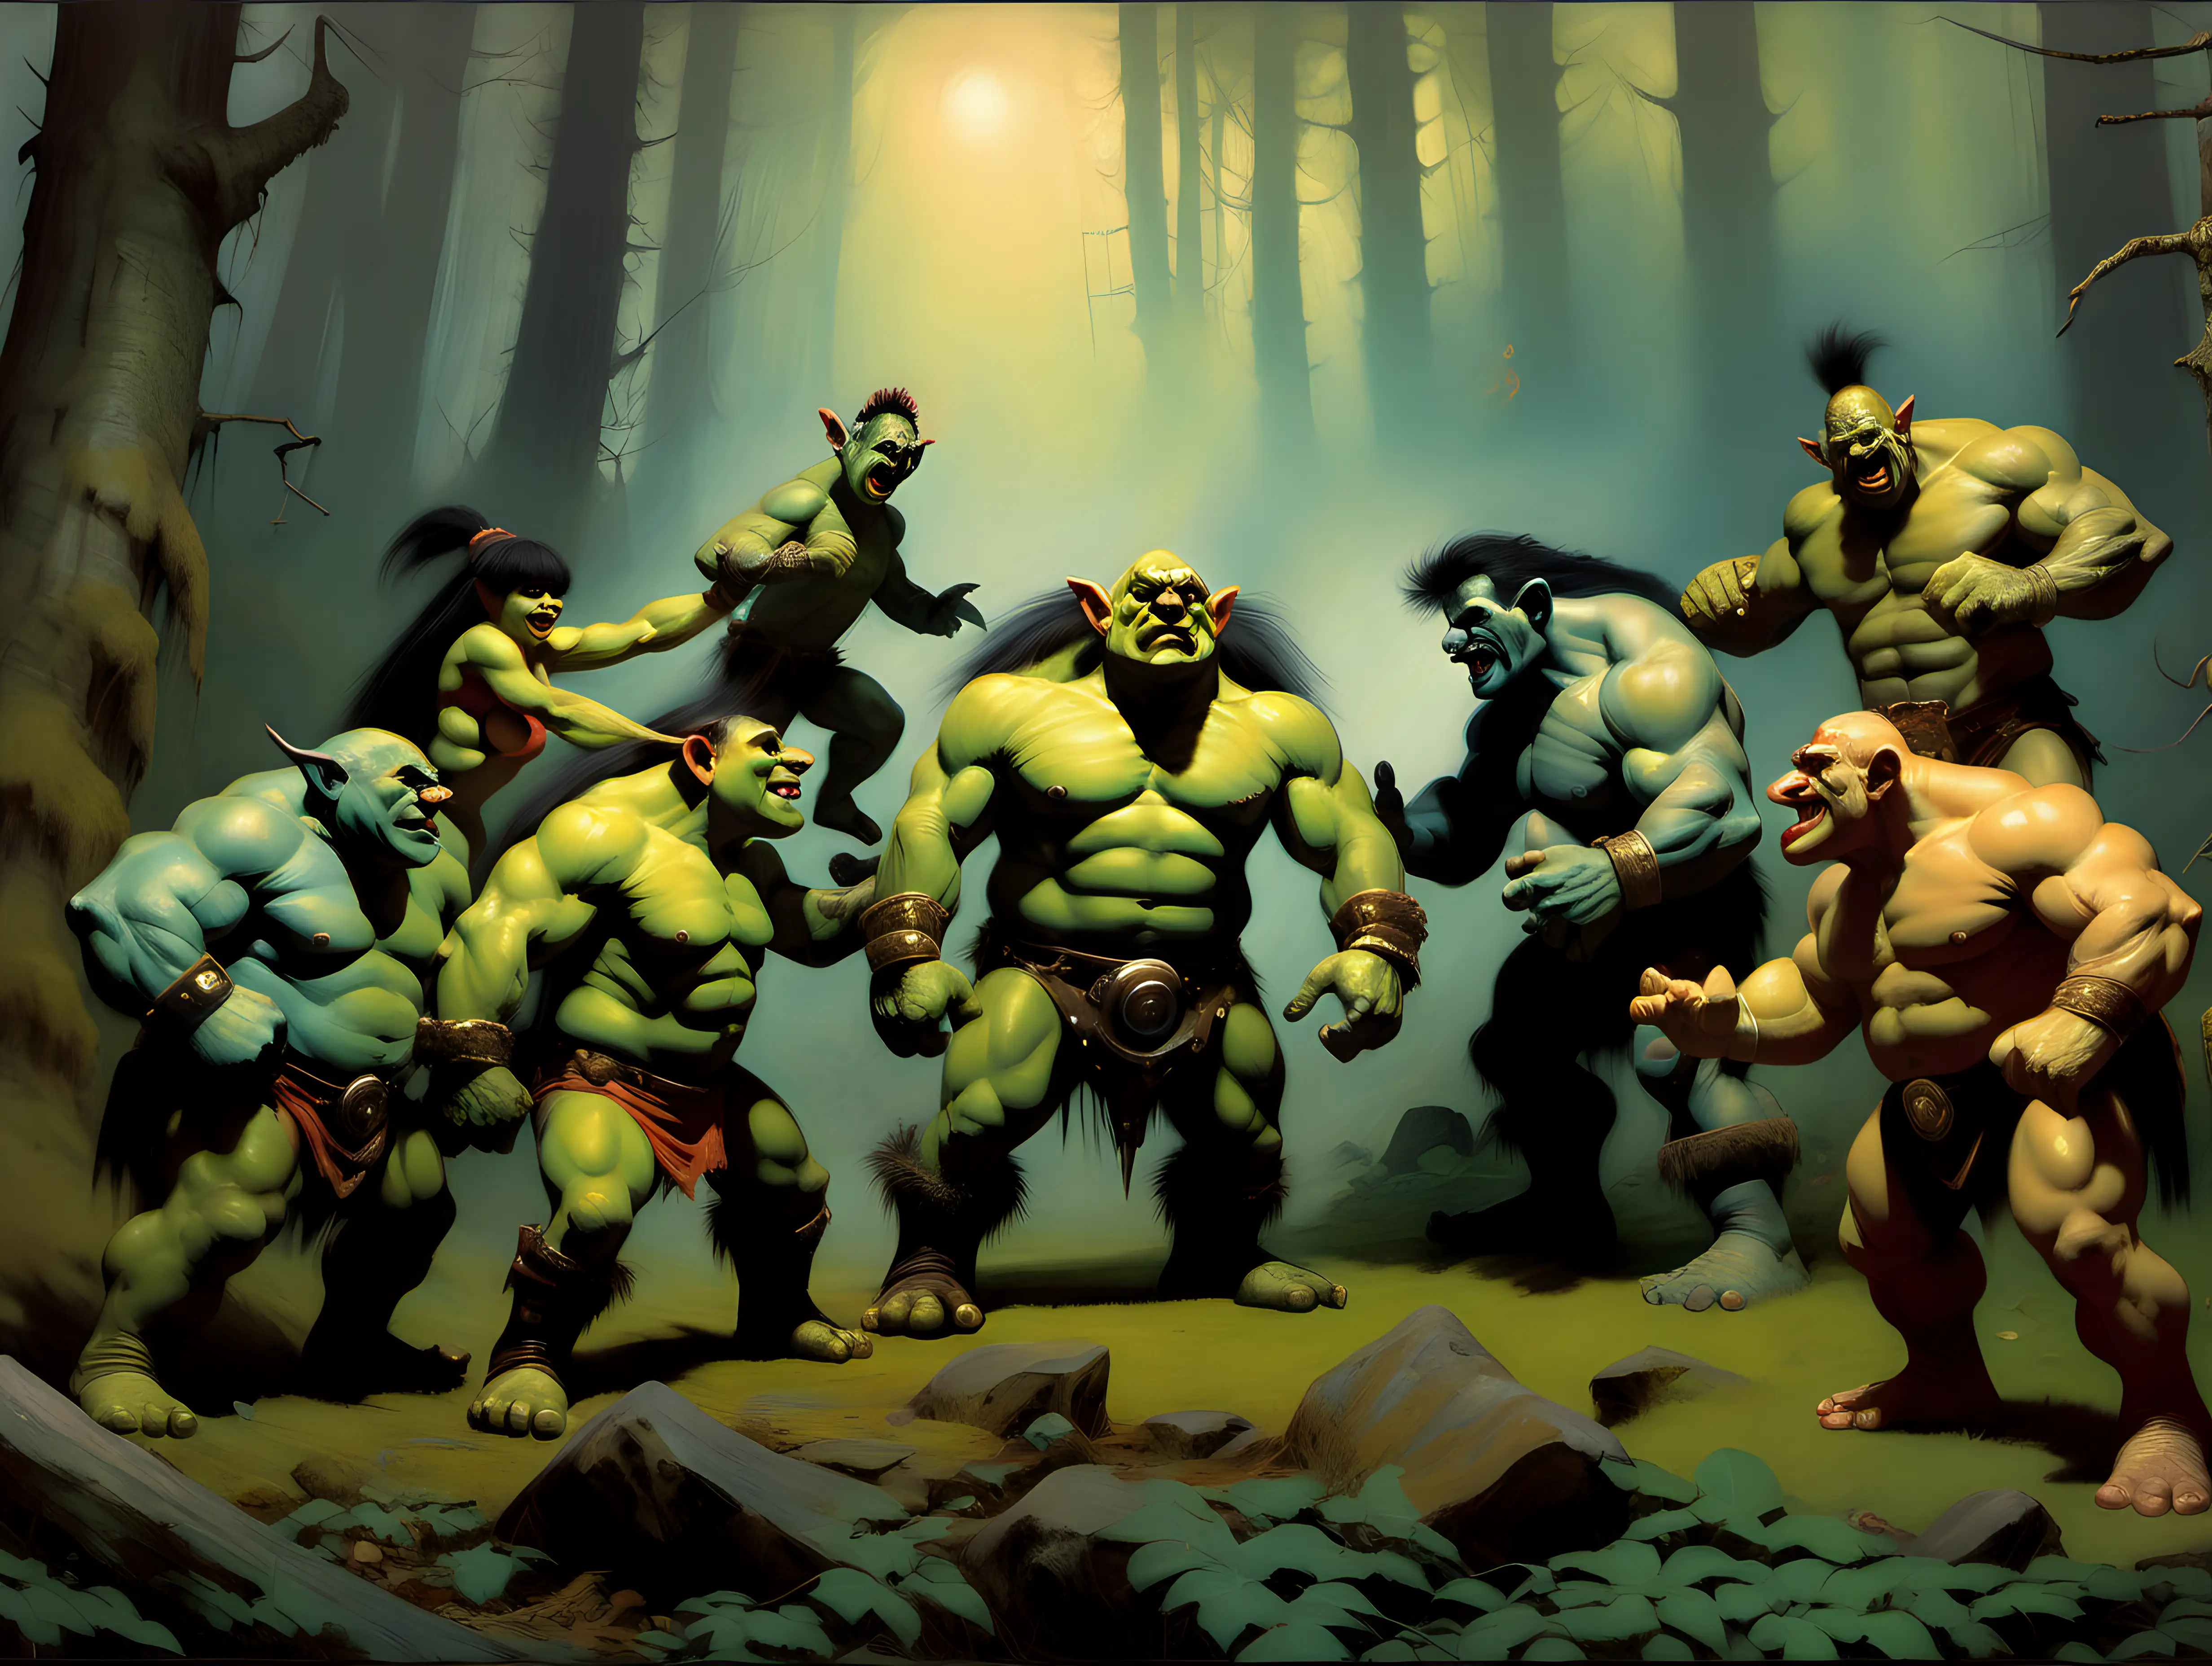 Epic Wrestling Match Trolls and Ogres in Enchanted Forest Frank Frazetta Style